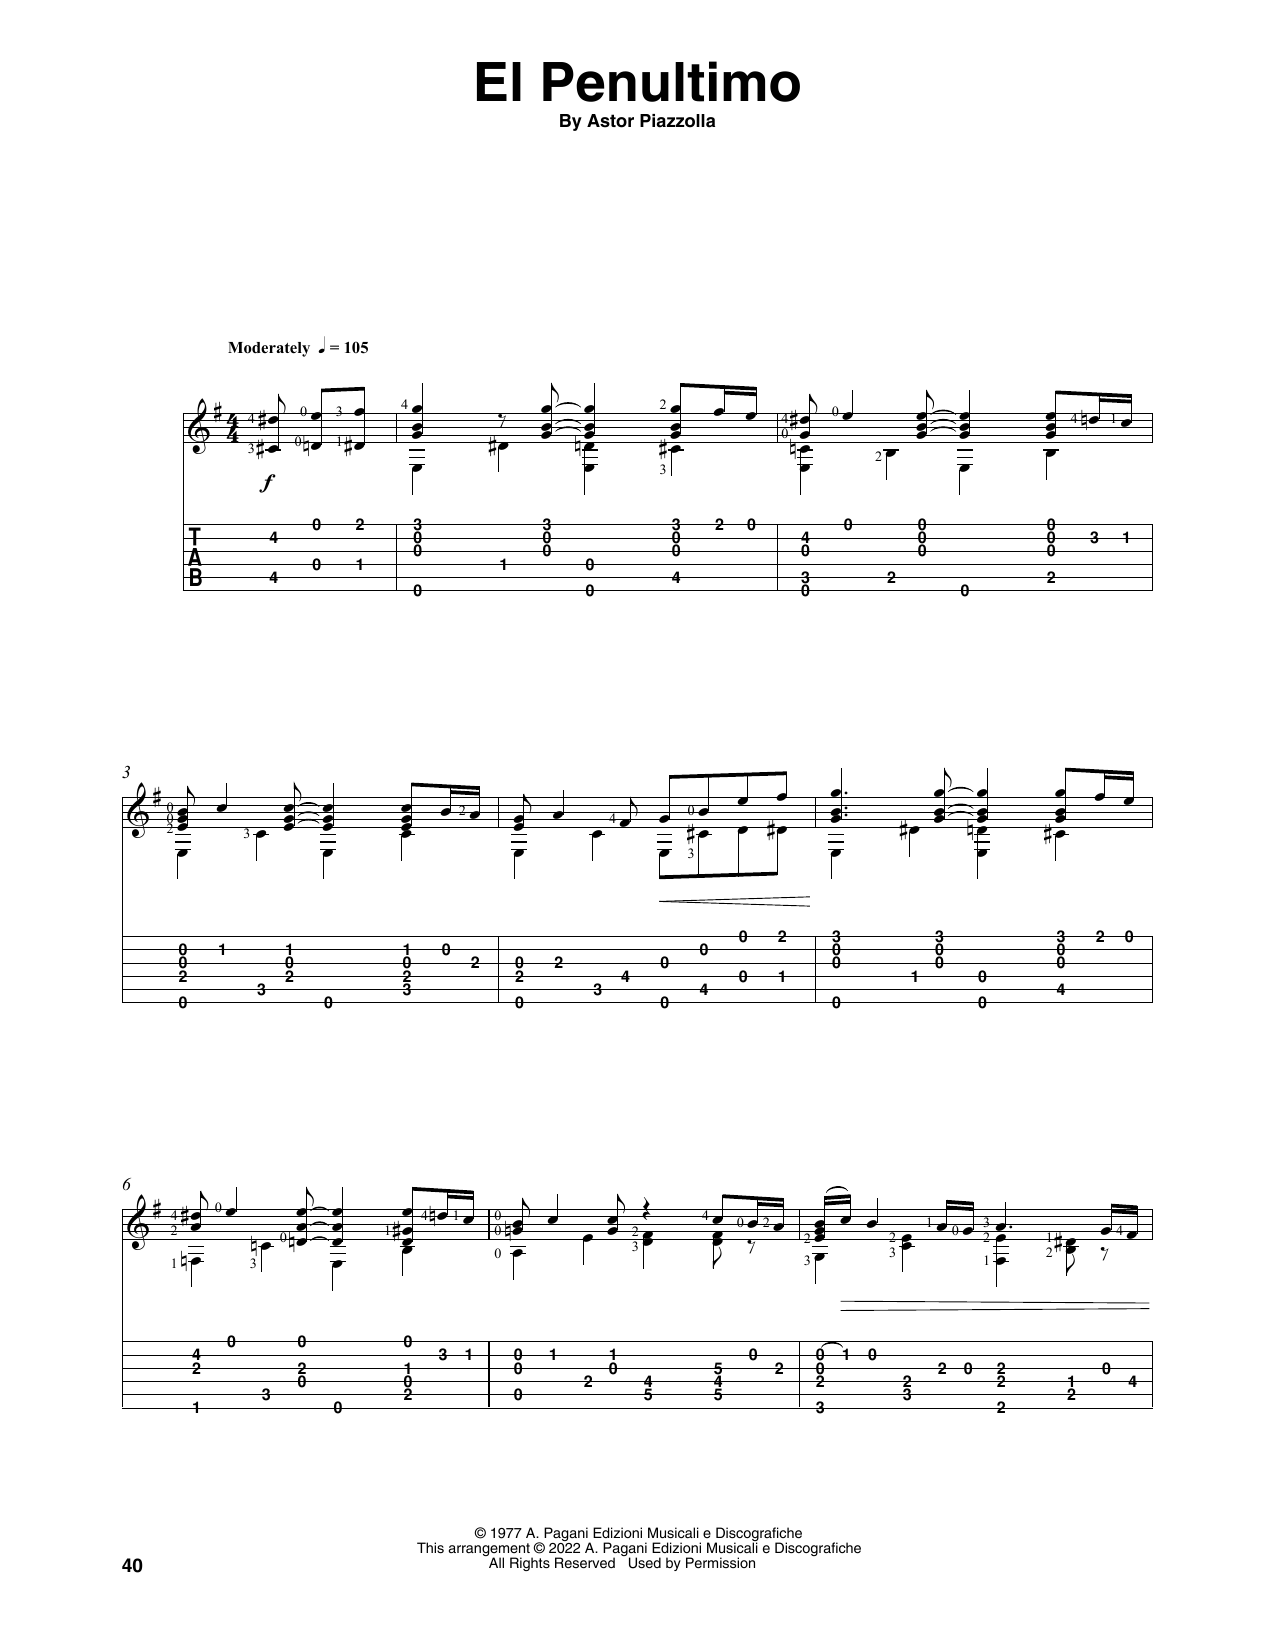 Astor Piazzolla El Penultimo (arr. Celil Refik Kaya) Sheet Music Notes & Chords for Solo Guitar - Download or Print PDF